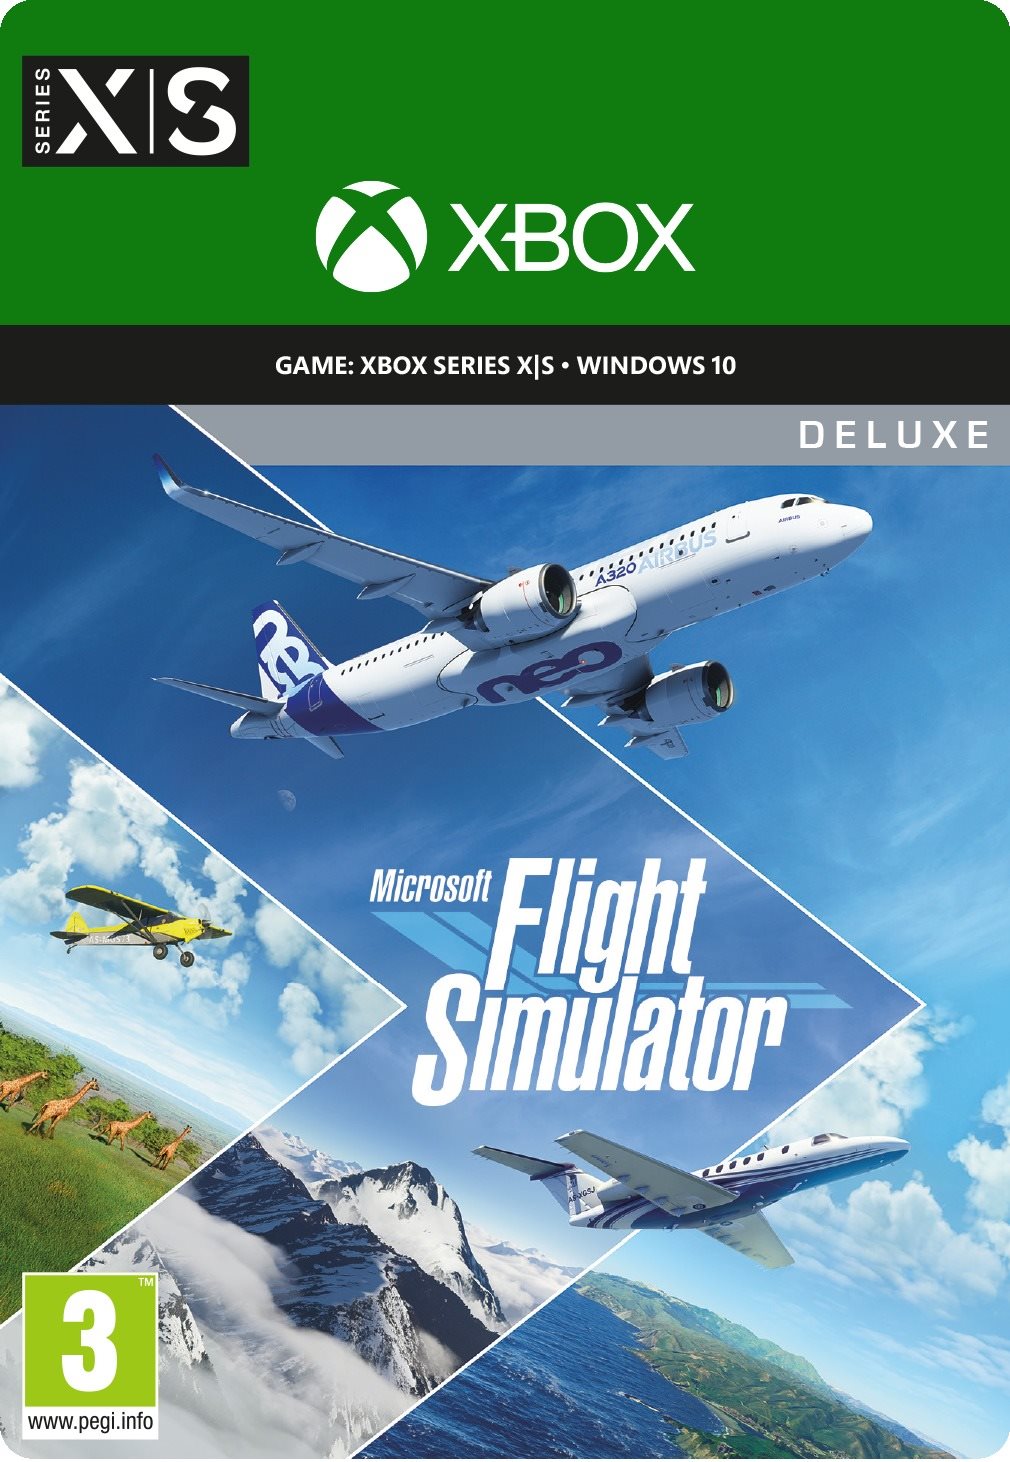 Microsoft Flight Simulator - Deluxe Edition - Xbox Series X|S / Windows 10 DIGITAL